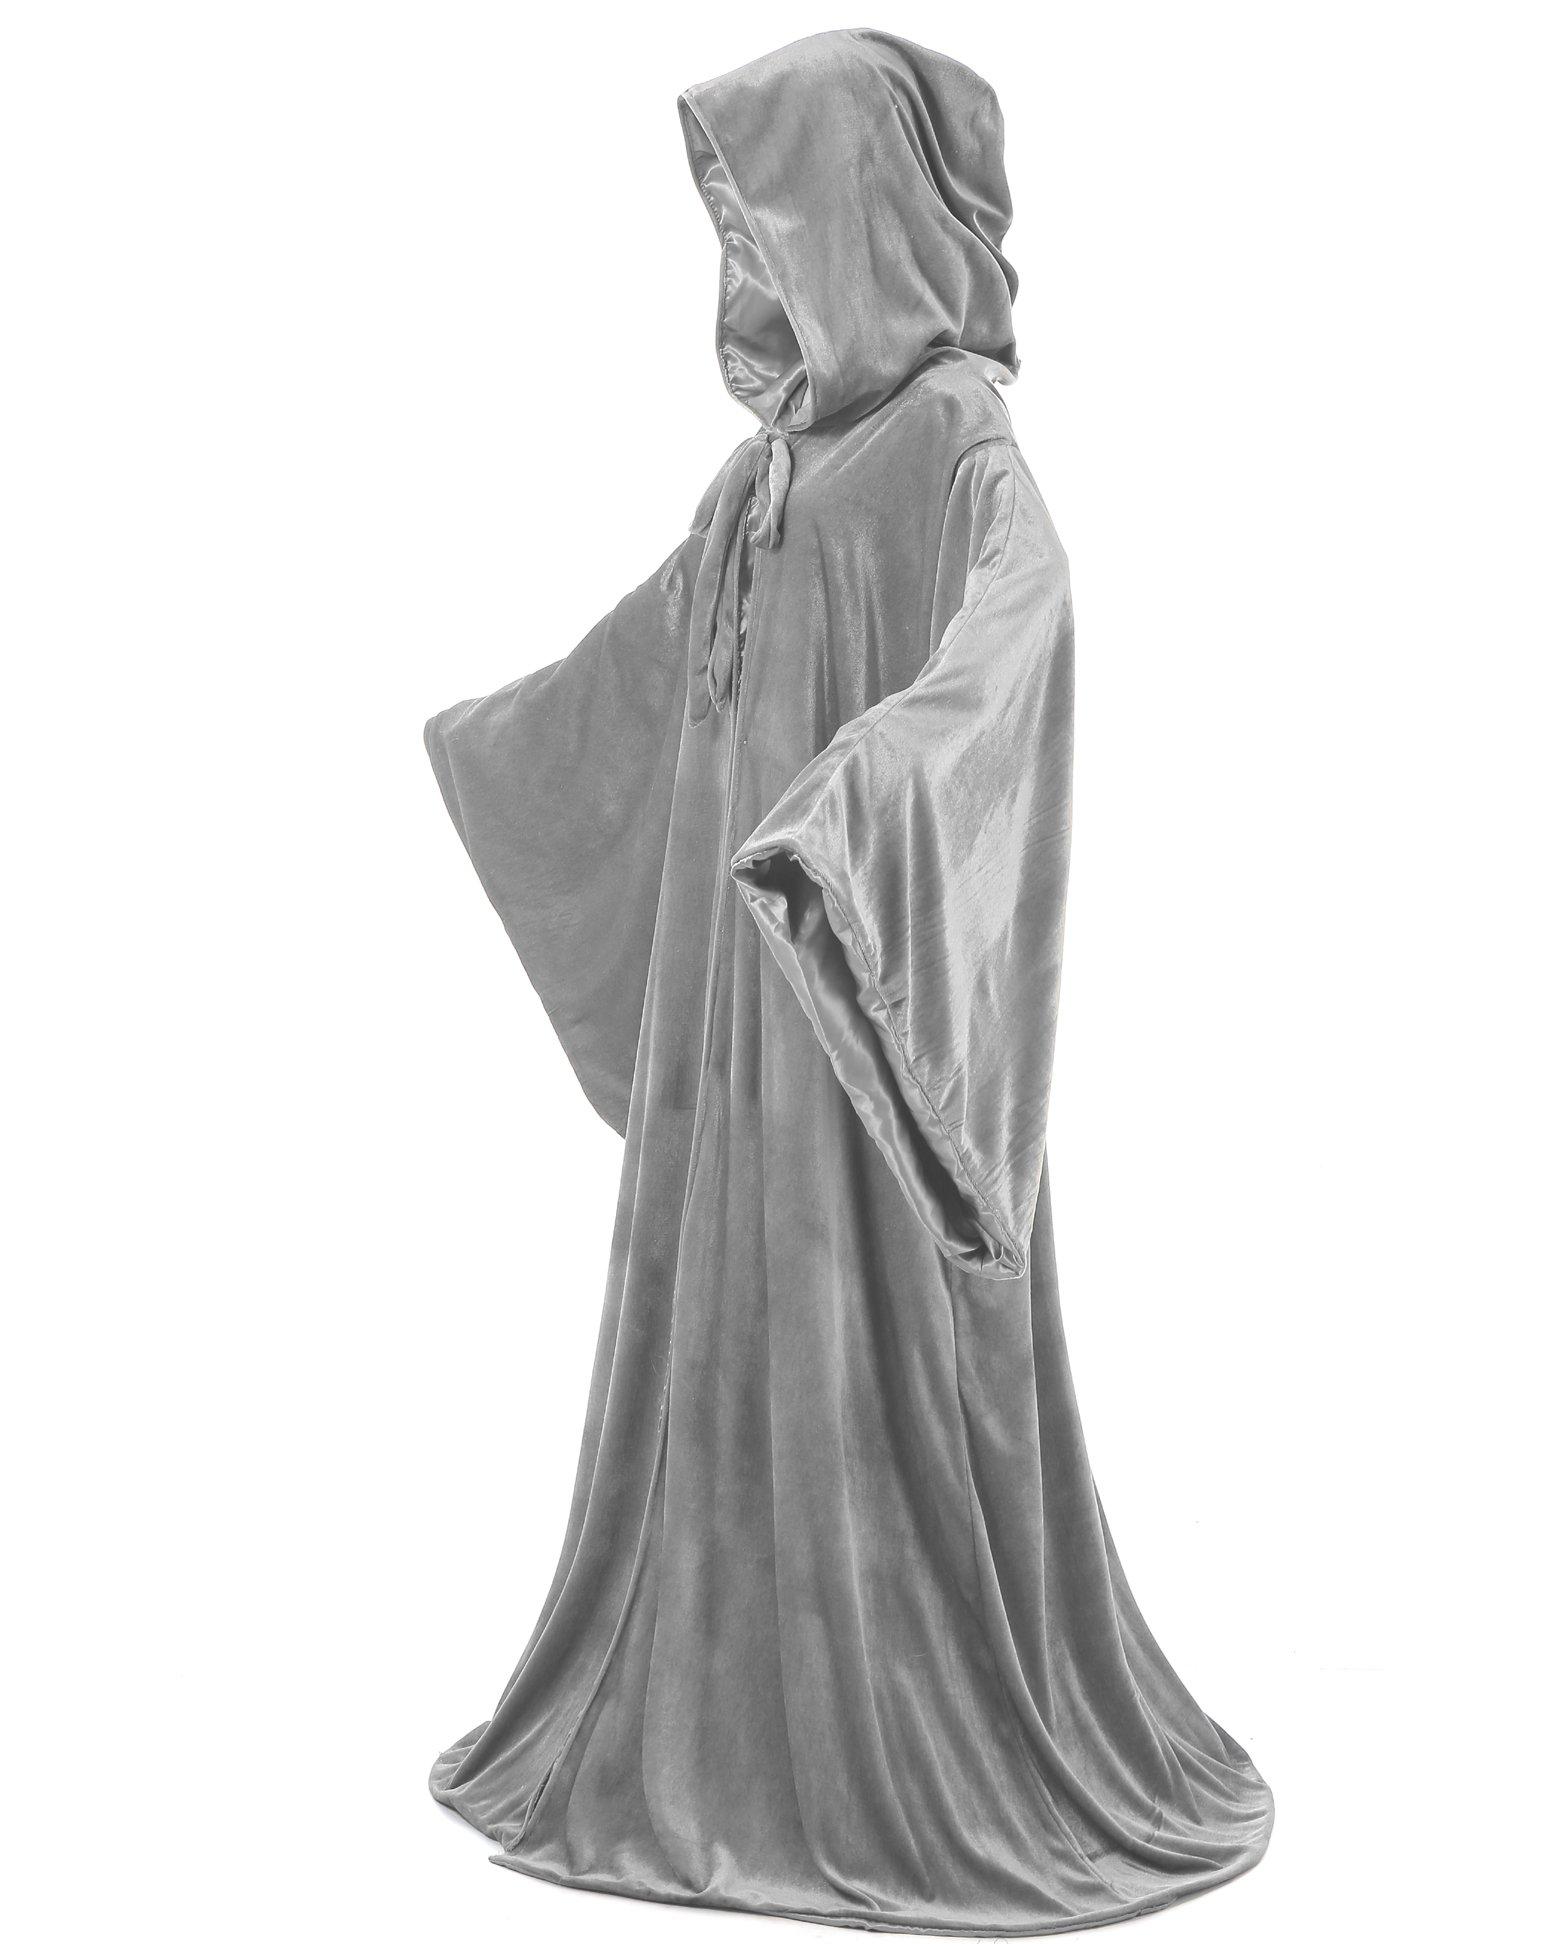 LuckyMjmy Velvet Renaissance Medieval Cloak Cape lined with Satin (Silver)